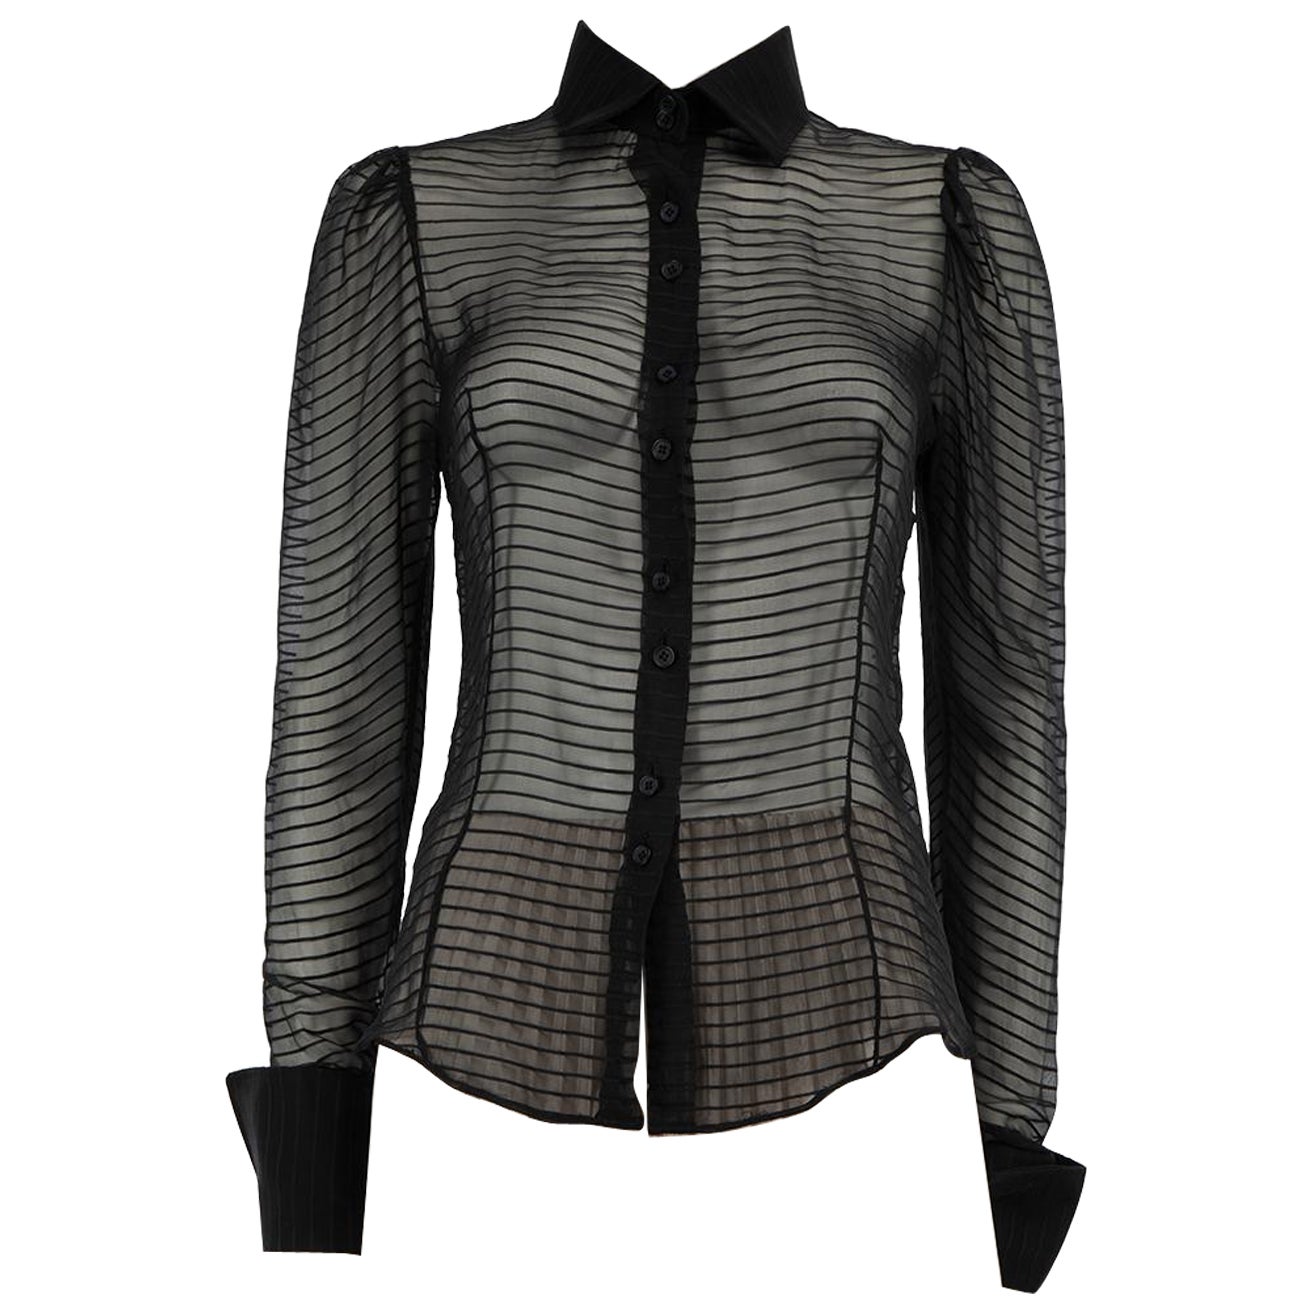 Stella McCartney Black Striped Sheer Blouse Size M For Sale